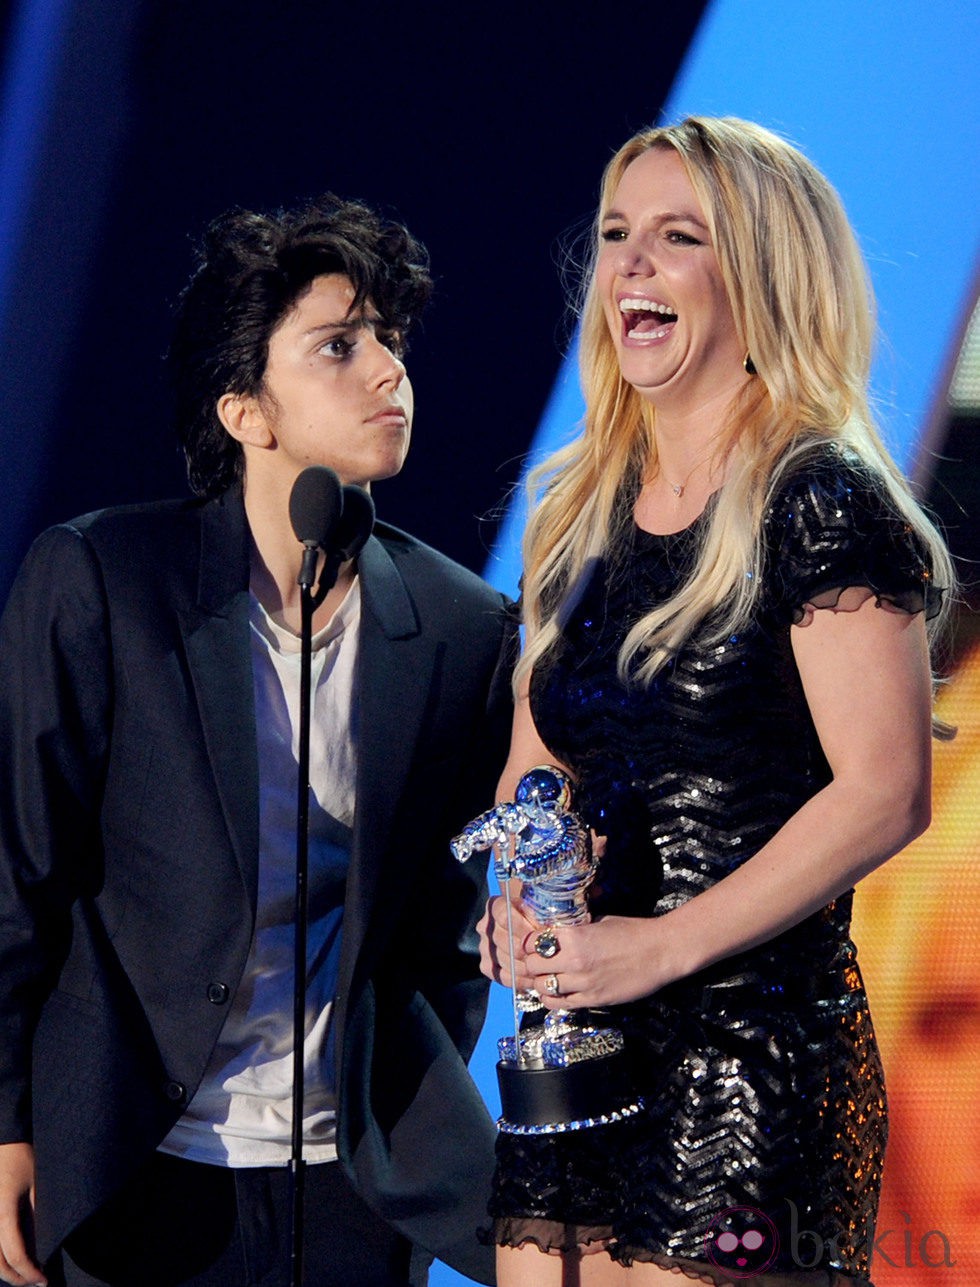 Lady Gaga y Britney Spears en los MTV Video Music Awards 2011